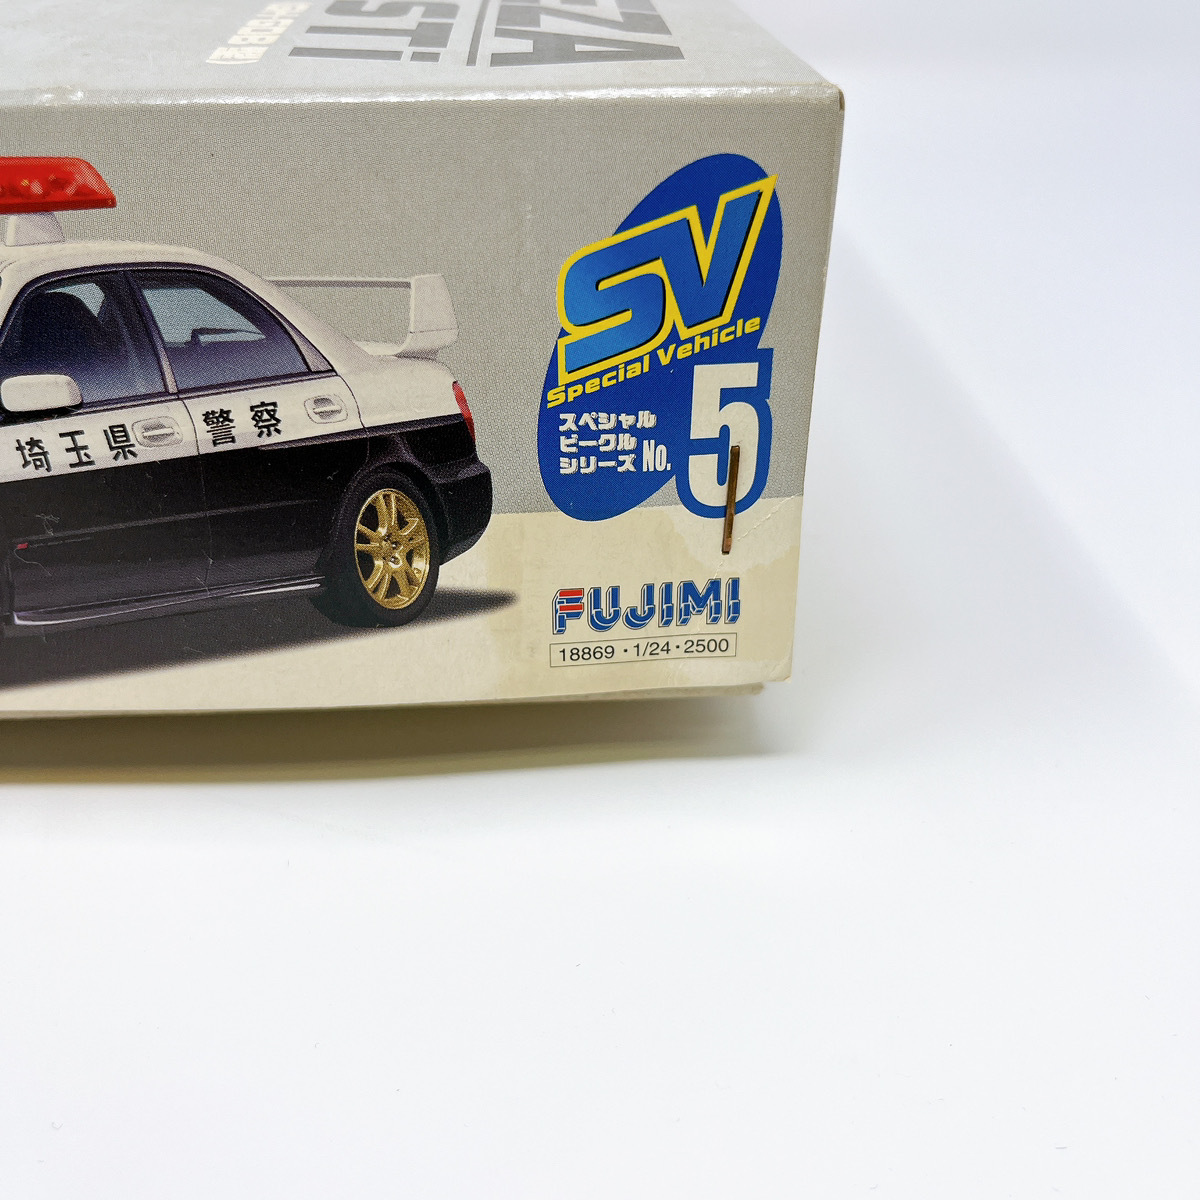 068A-2 нераспечатанный не собран Fujimi 1/24 Subaru Impreza WRX STi Patrol .- патрульная машина GH-GDB пластиковая модель FUJIMI SUBARU IMPREZA Saitama 